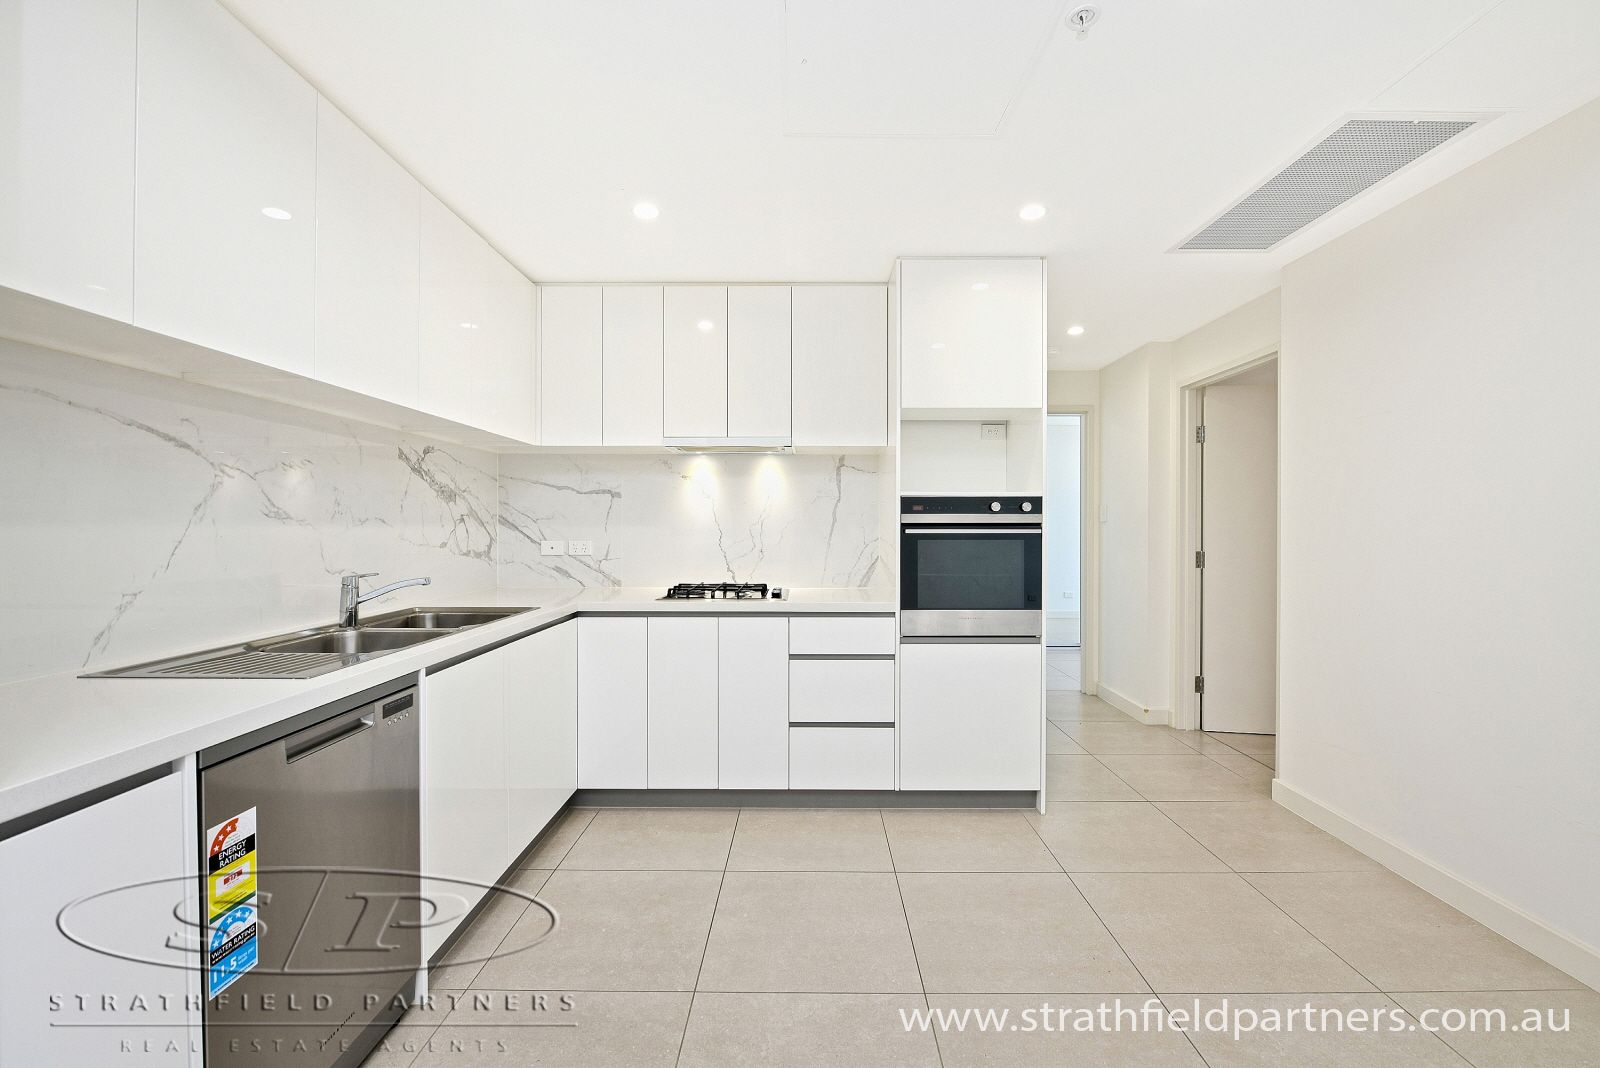 2 bedrooms Apartment / Unit / Flat in 601/8-14 Lyons Street STRATHFIELD NSW, 2135